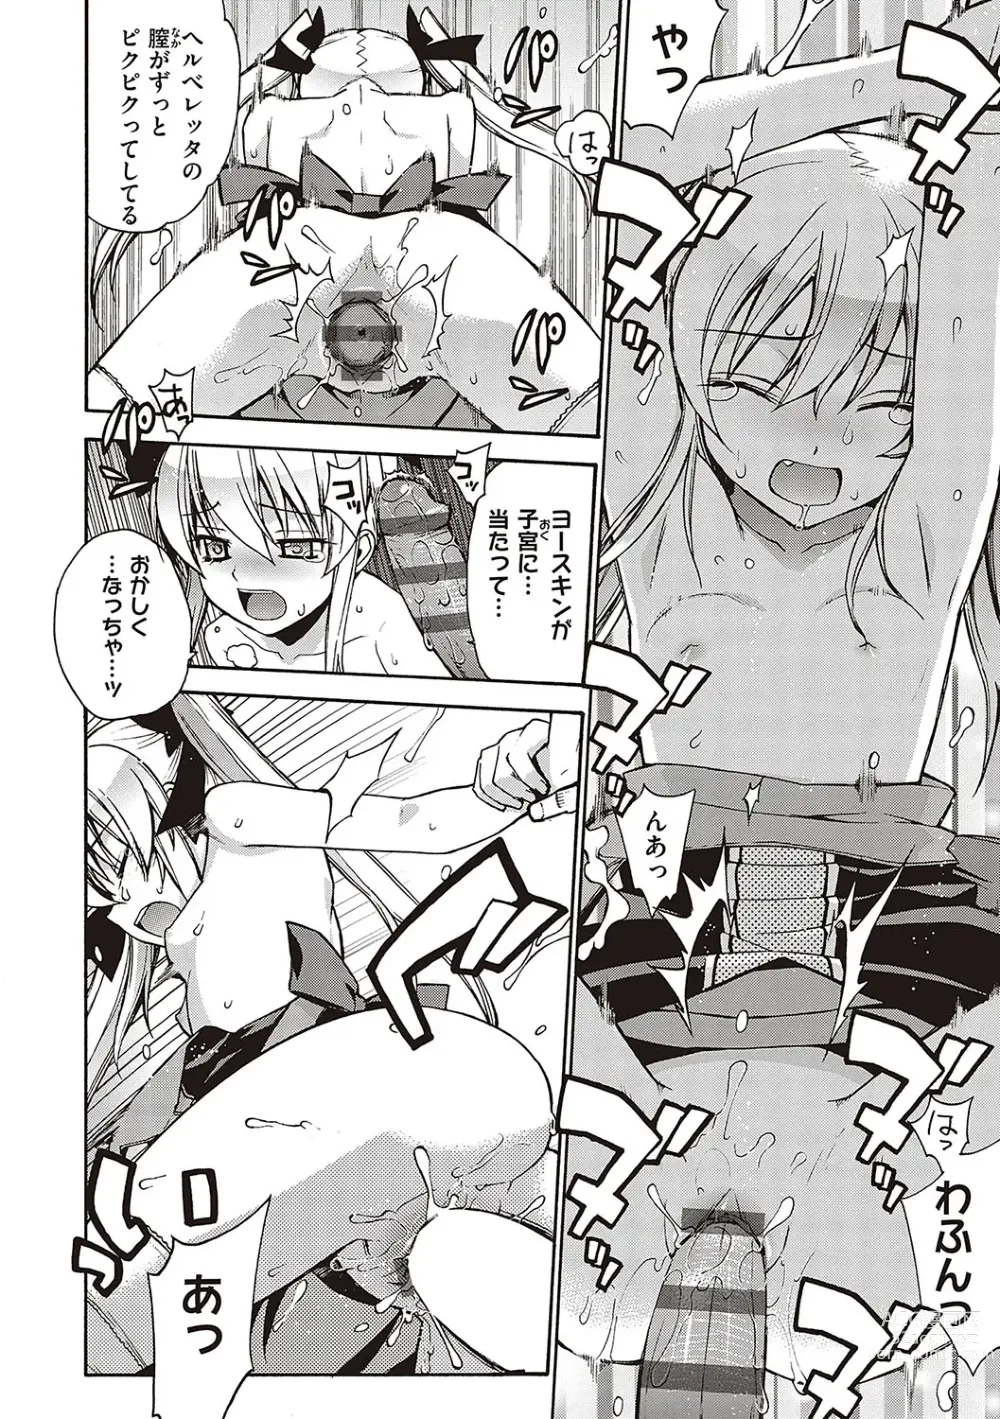 Page 245 of manga KOAKUMA DAISY